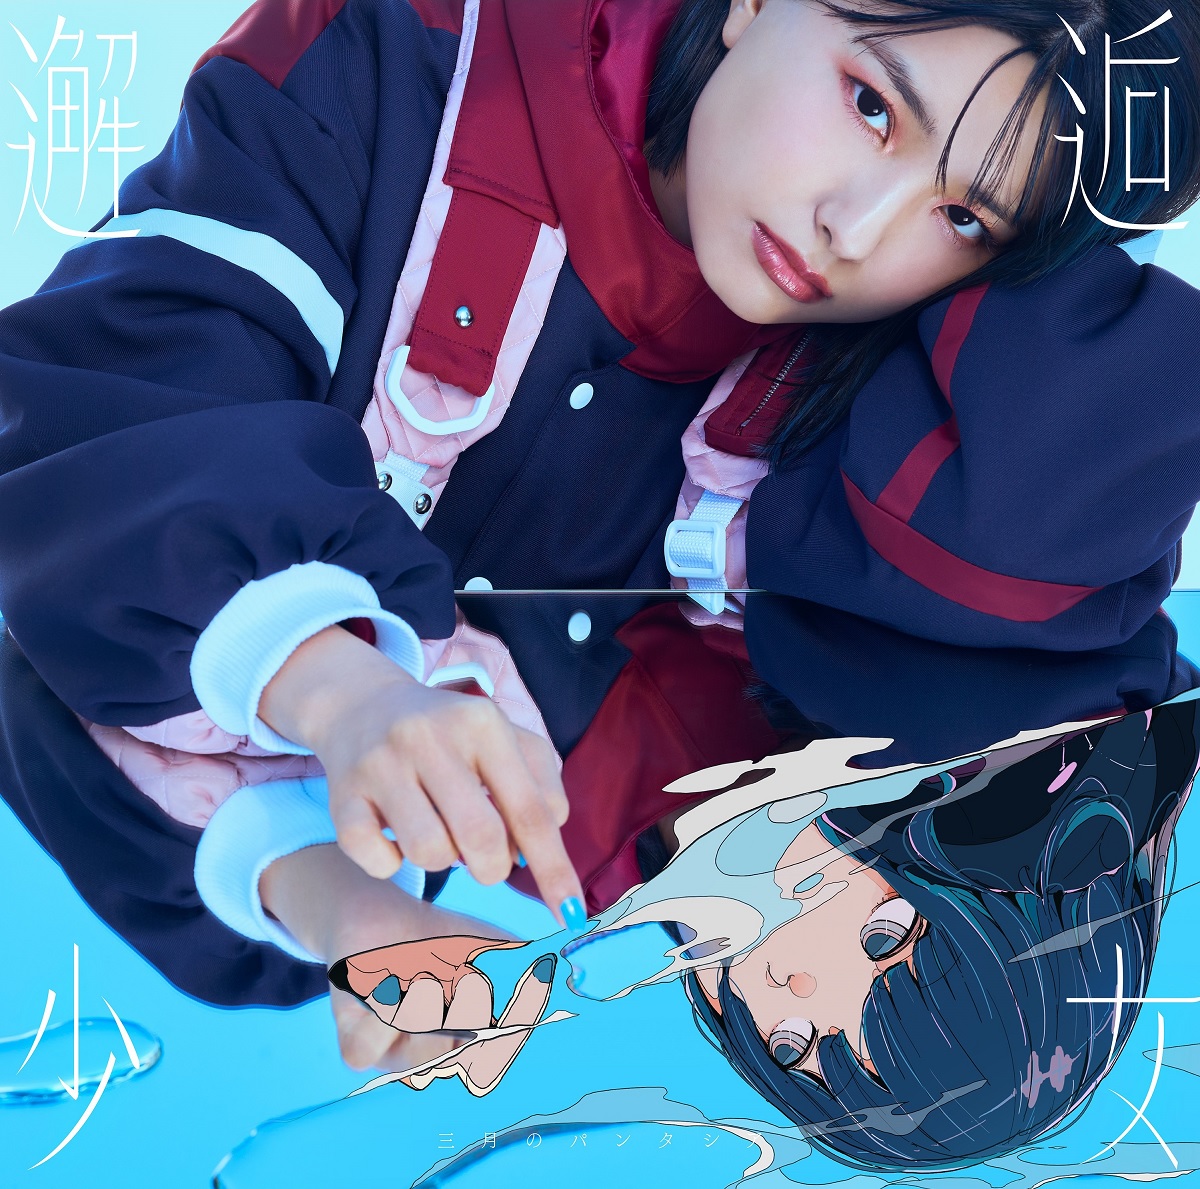 Cover art for『Sangatsu no Phantasia - Haru ni Negai wo』from the release『Kaikou Shoujo』